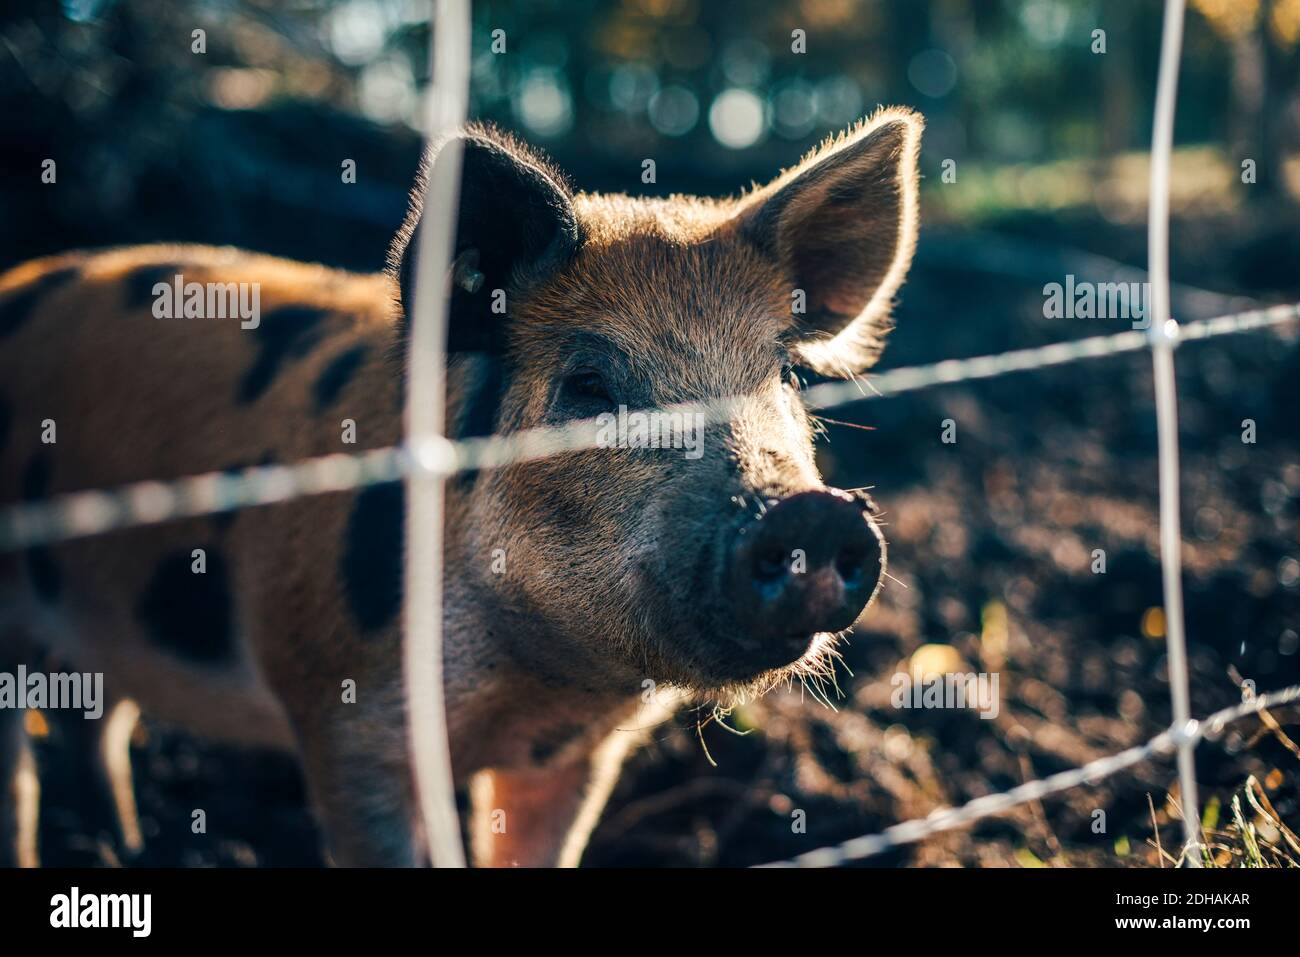 Pig standing in animal pen at organic farm Stock Photo